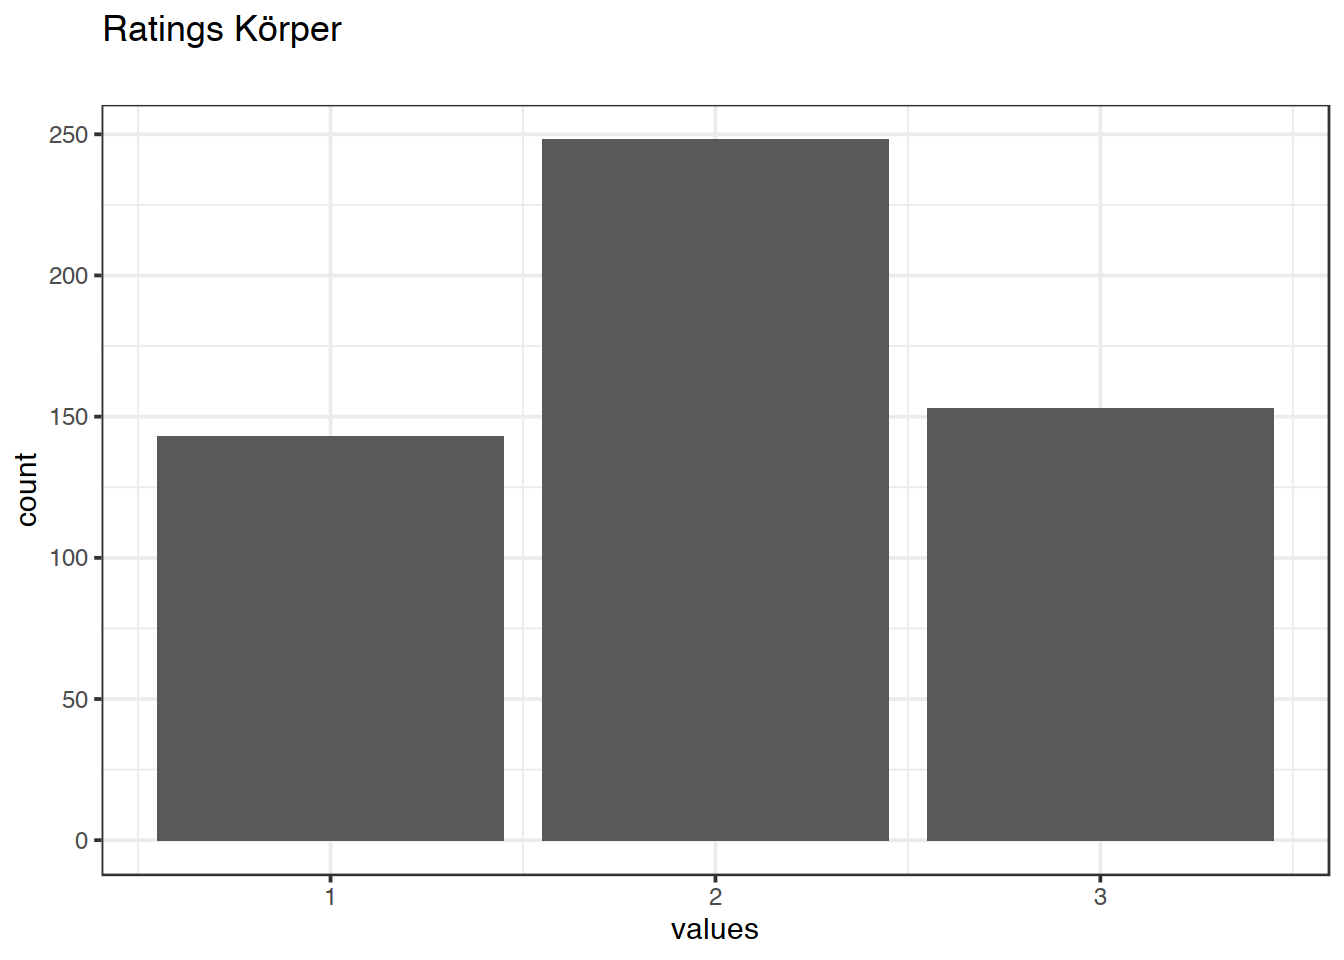 Distribution of values for Ratings Körper